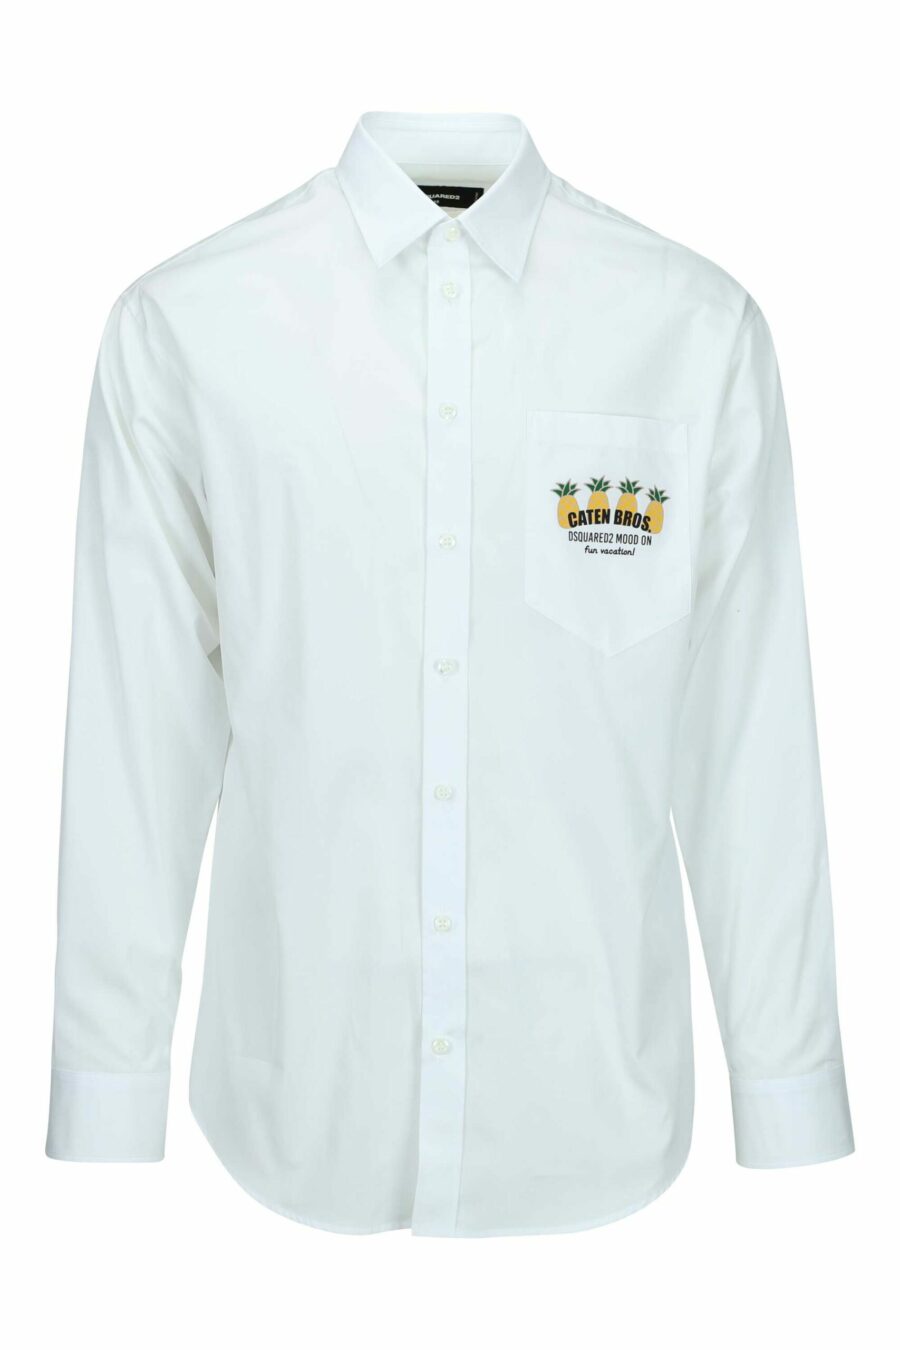 Camisa branca com mini-logotipo de ananás - 8054148528201